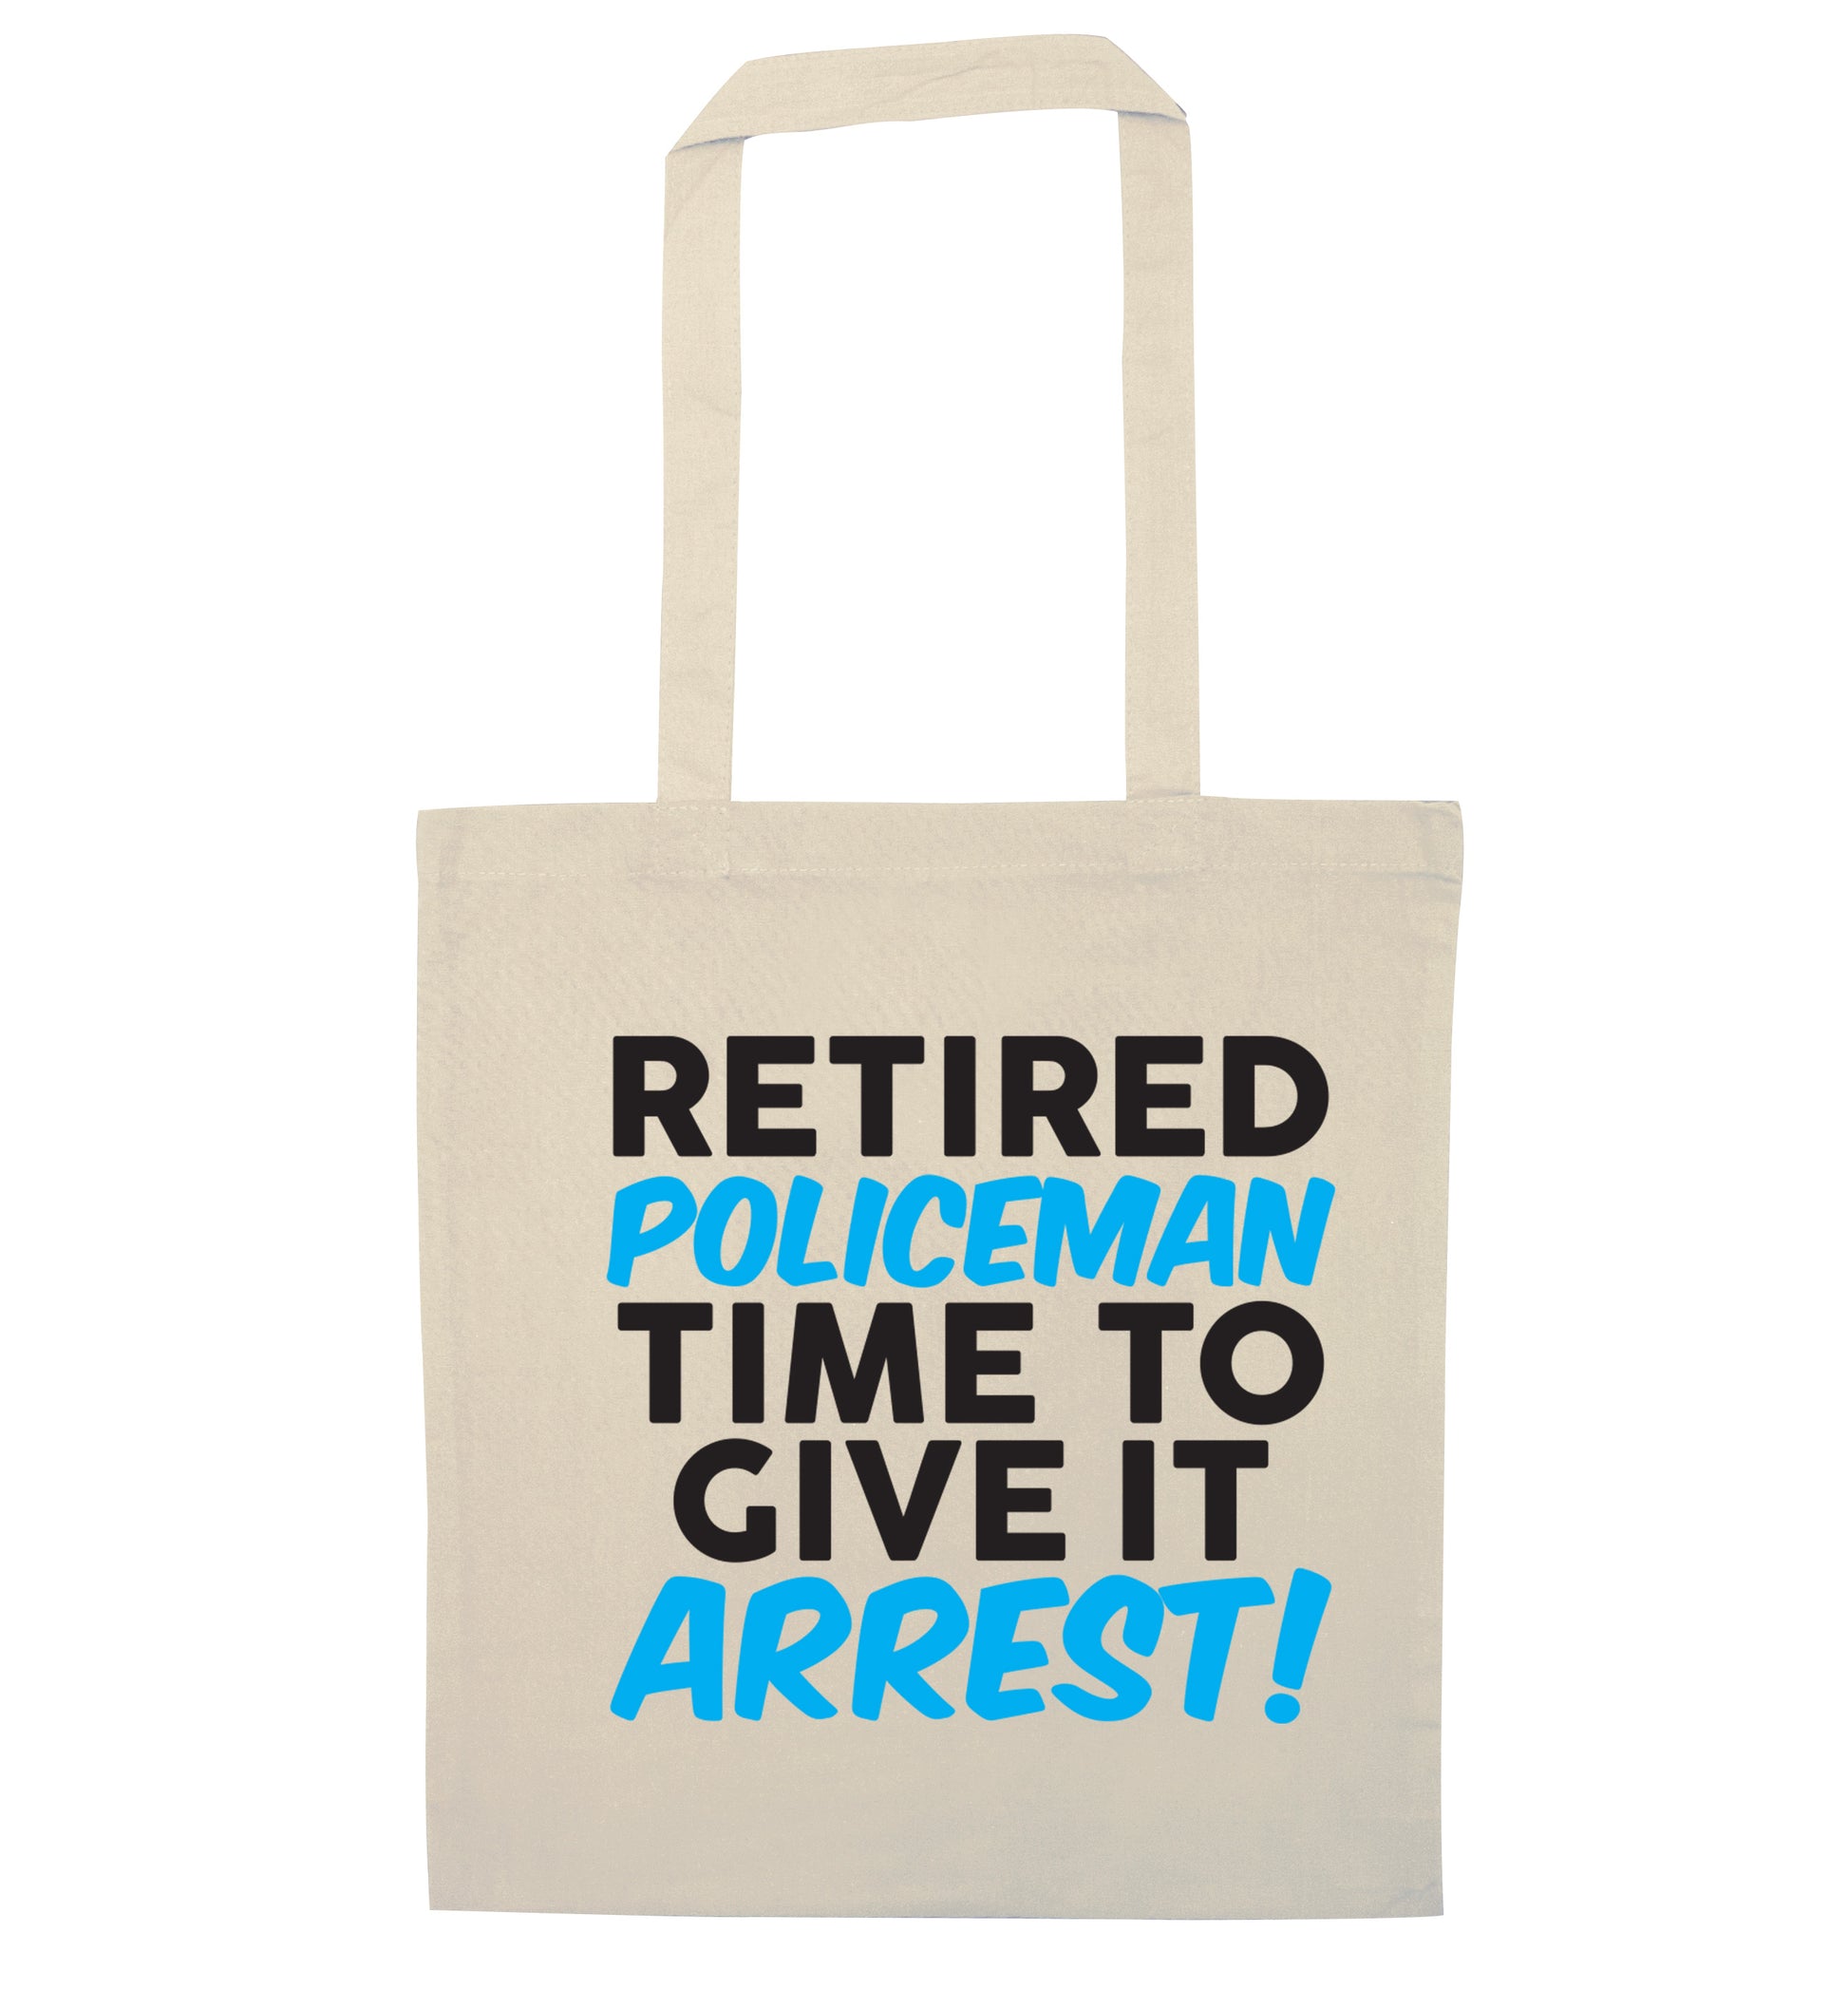 Retired policeman give it arresst! natural tote bag